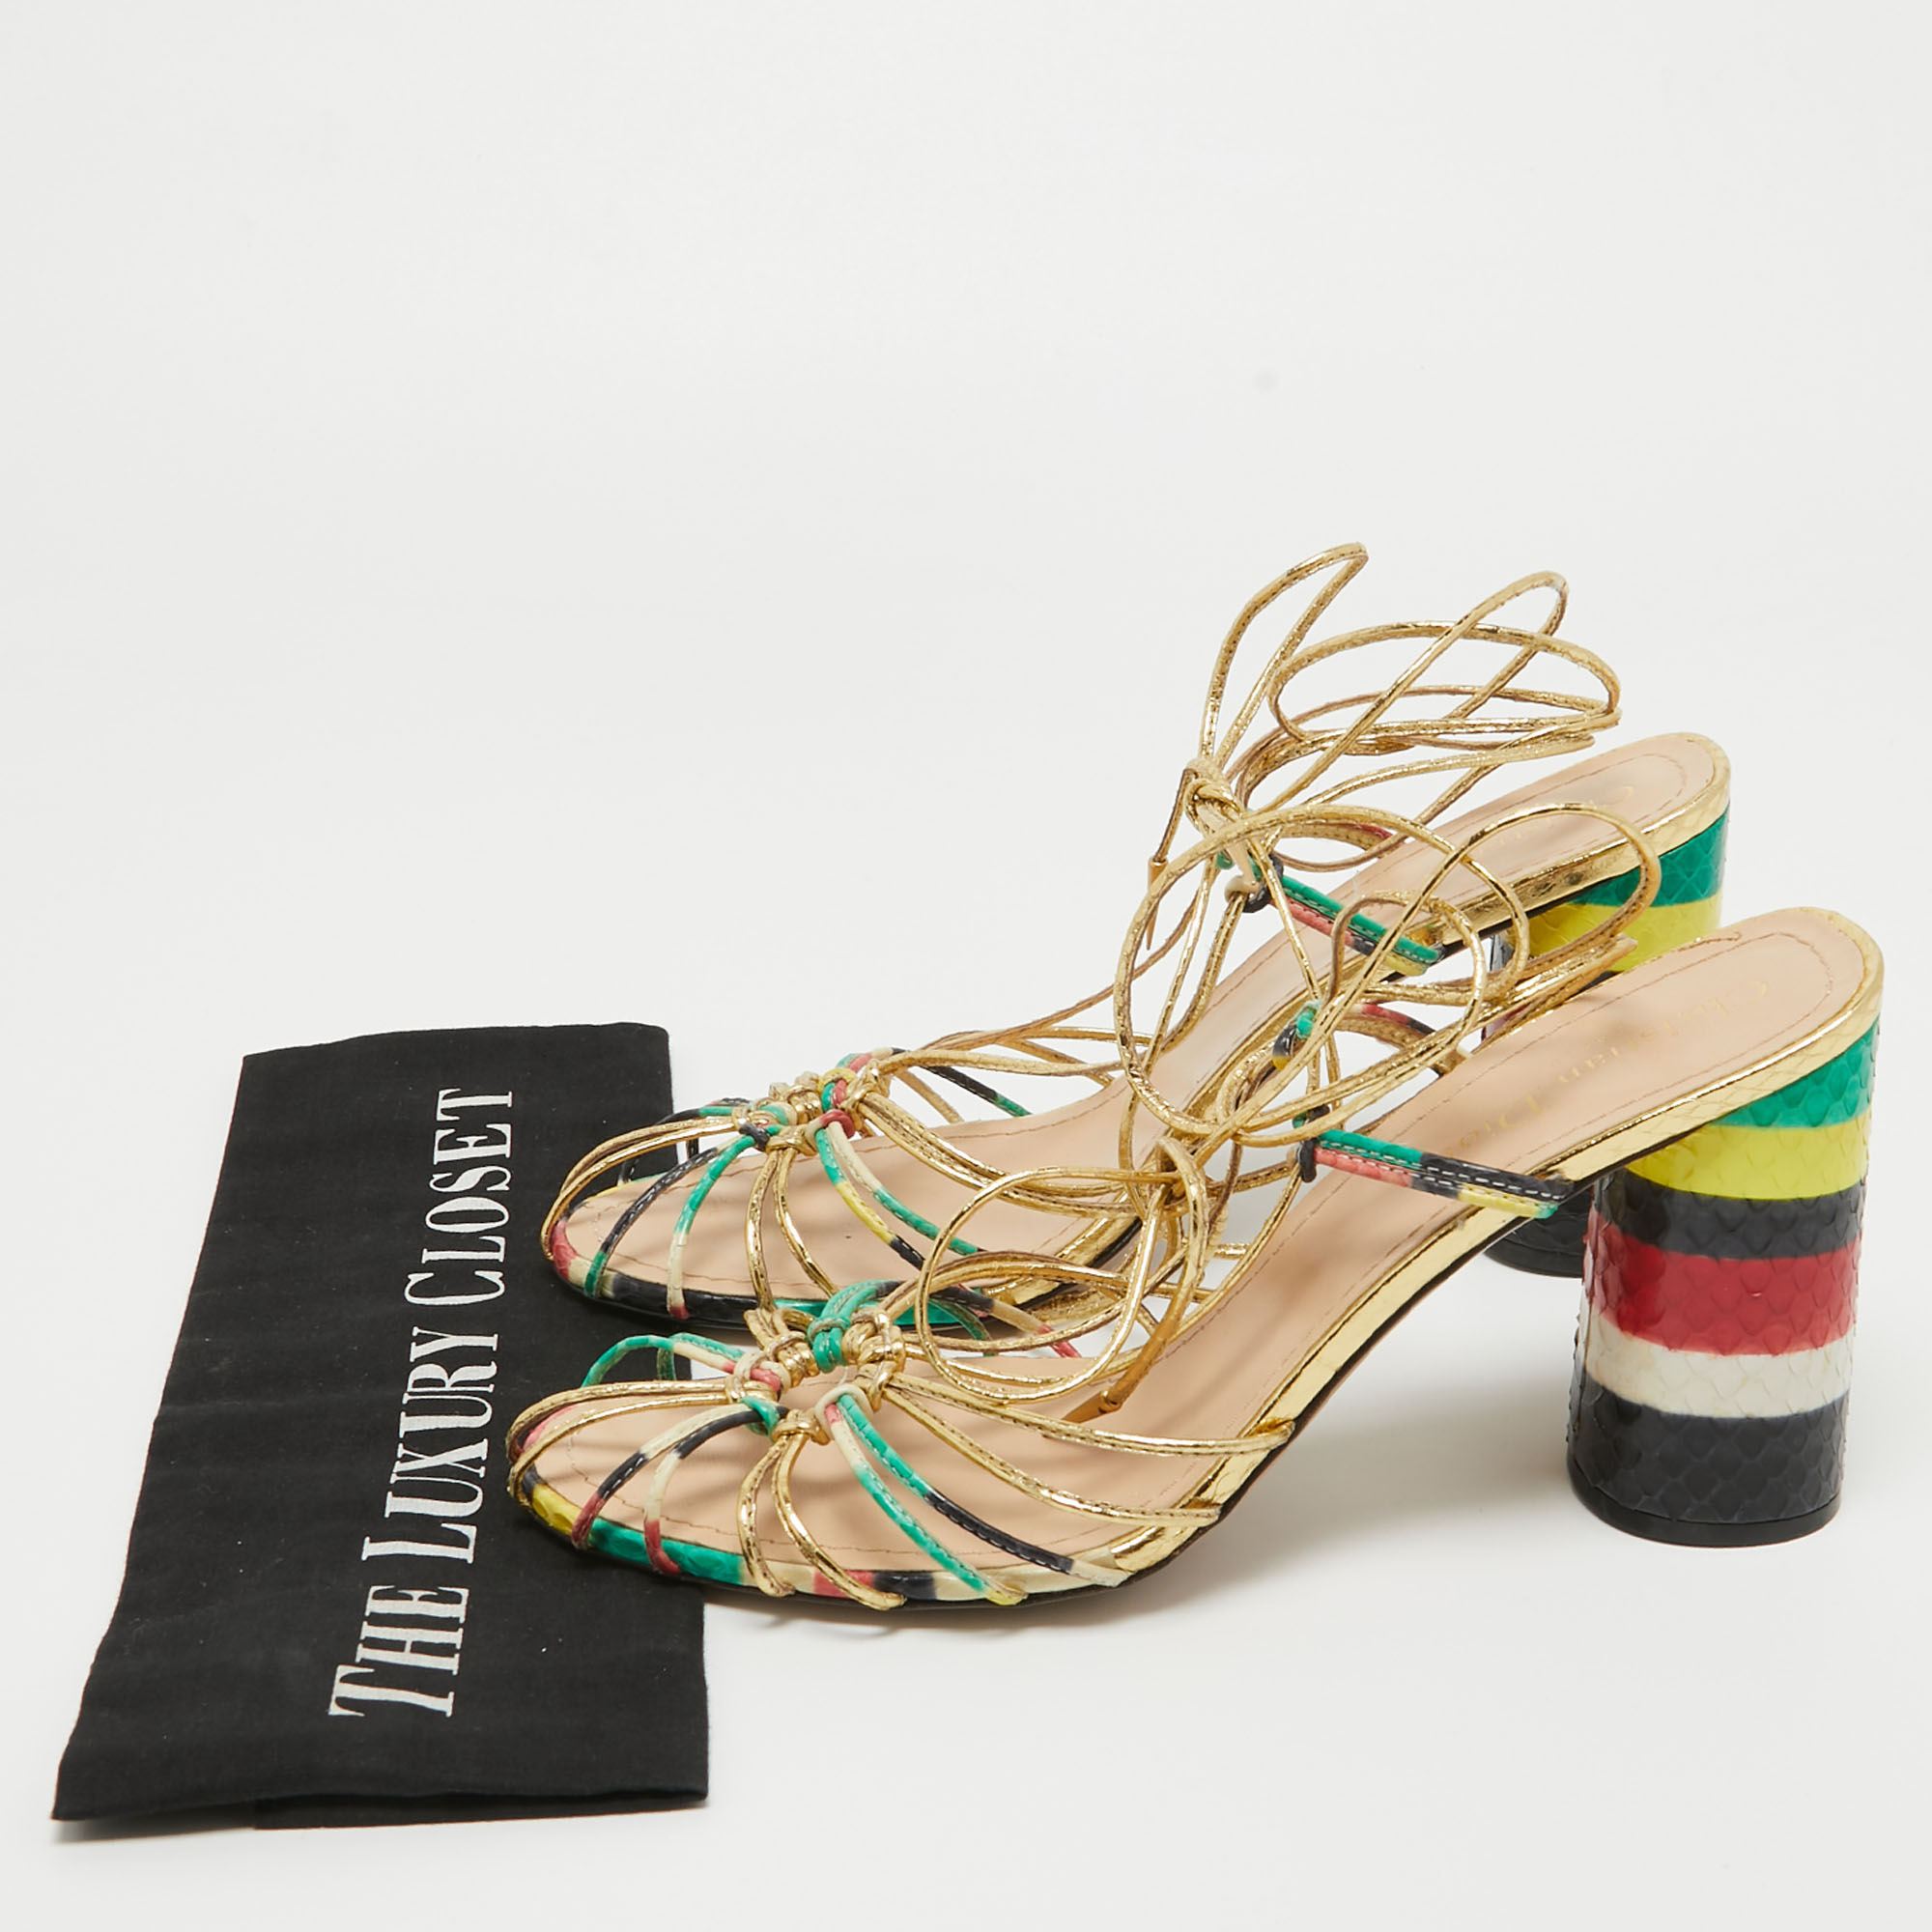 Dior Multicolor Leather Stripy  Ankle Wrap Sandals Size 40.5